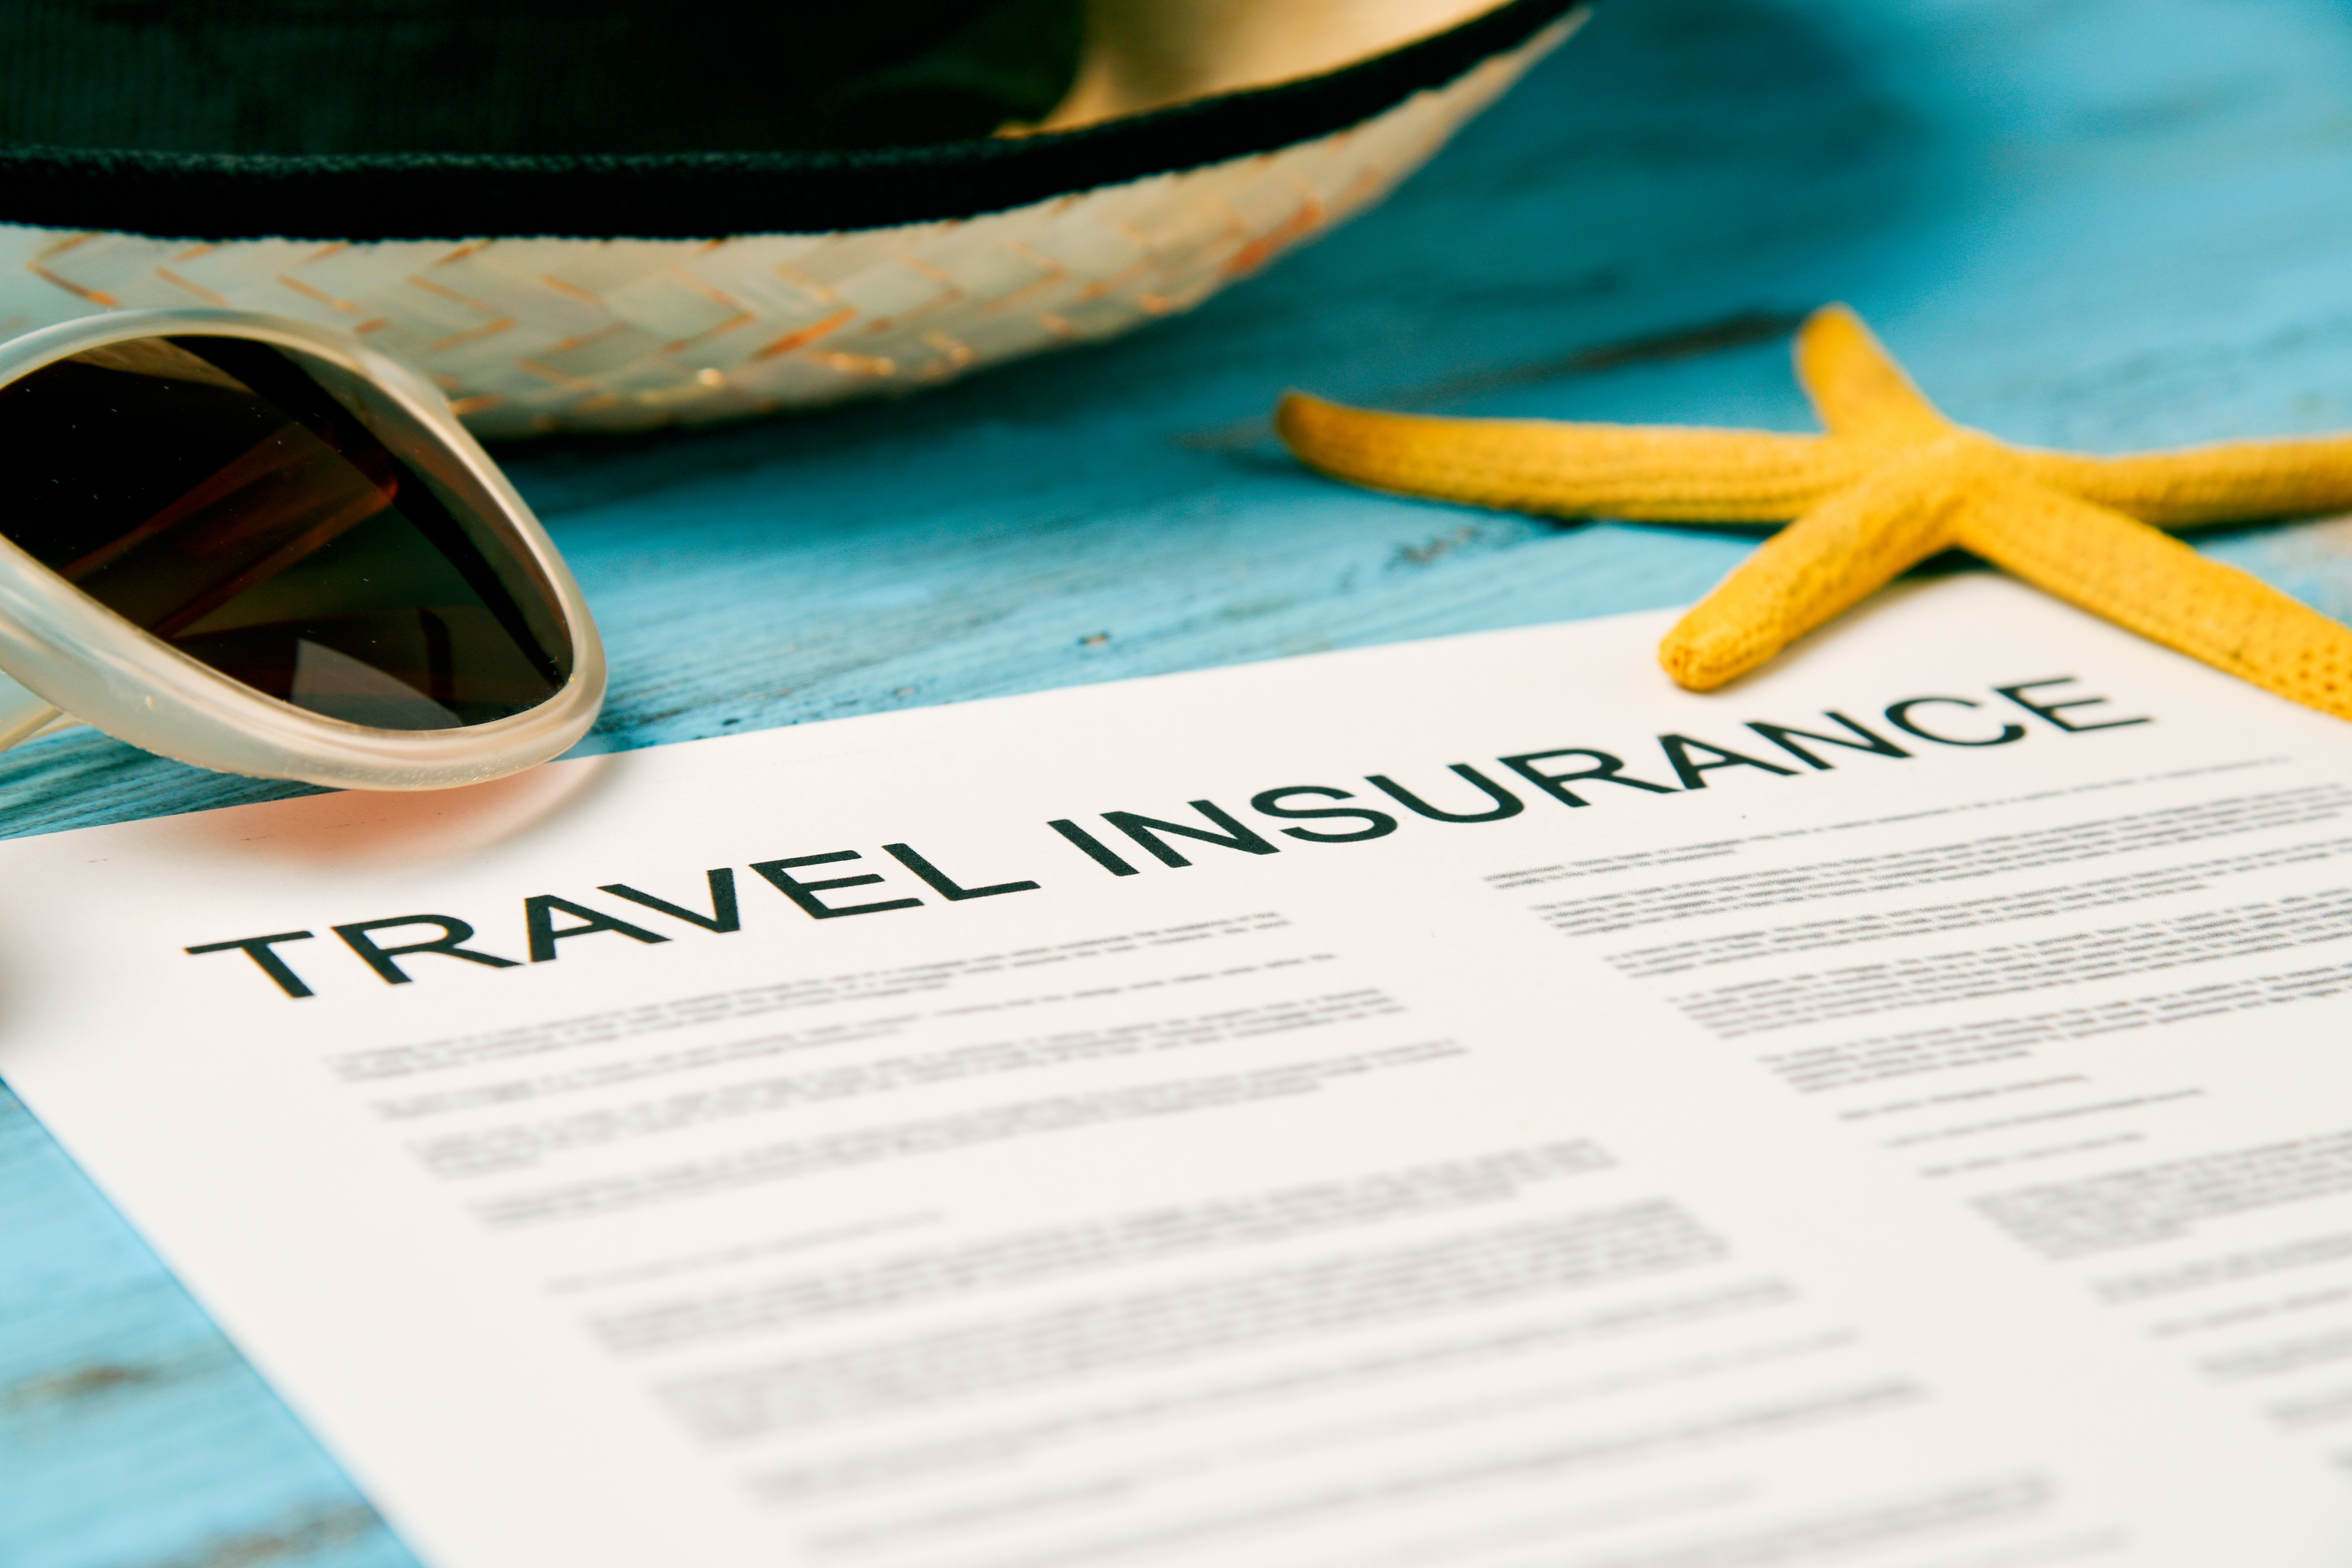 Travel insurance policy next to starfish and sunglasses